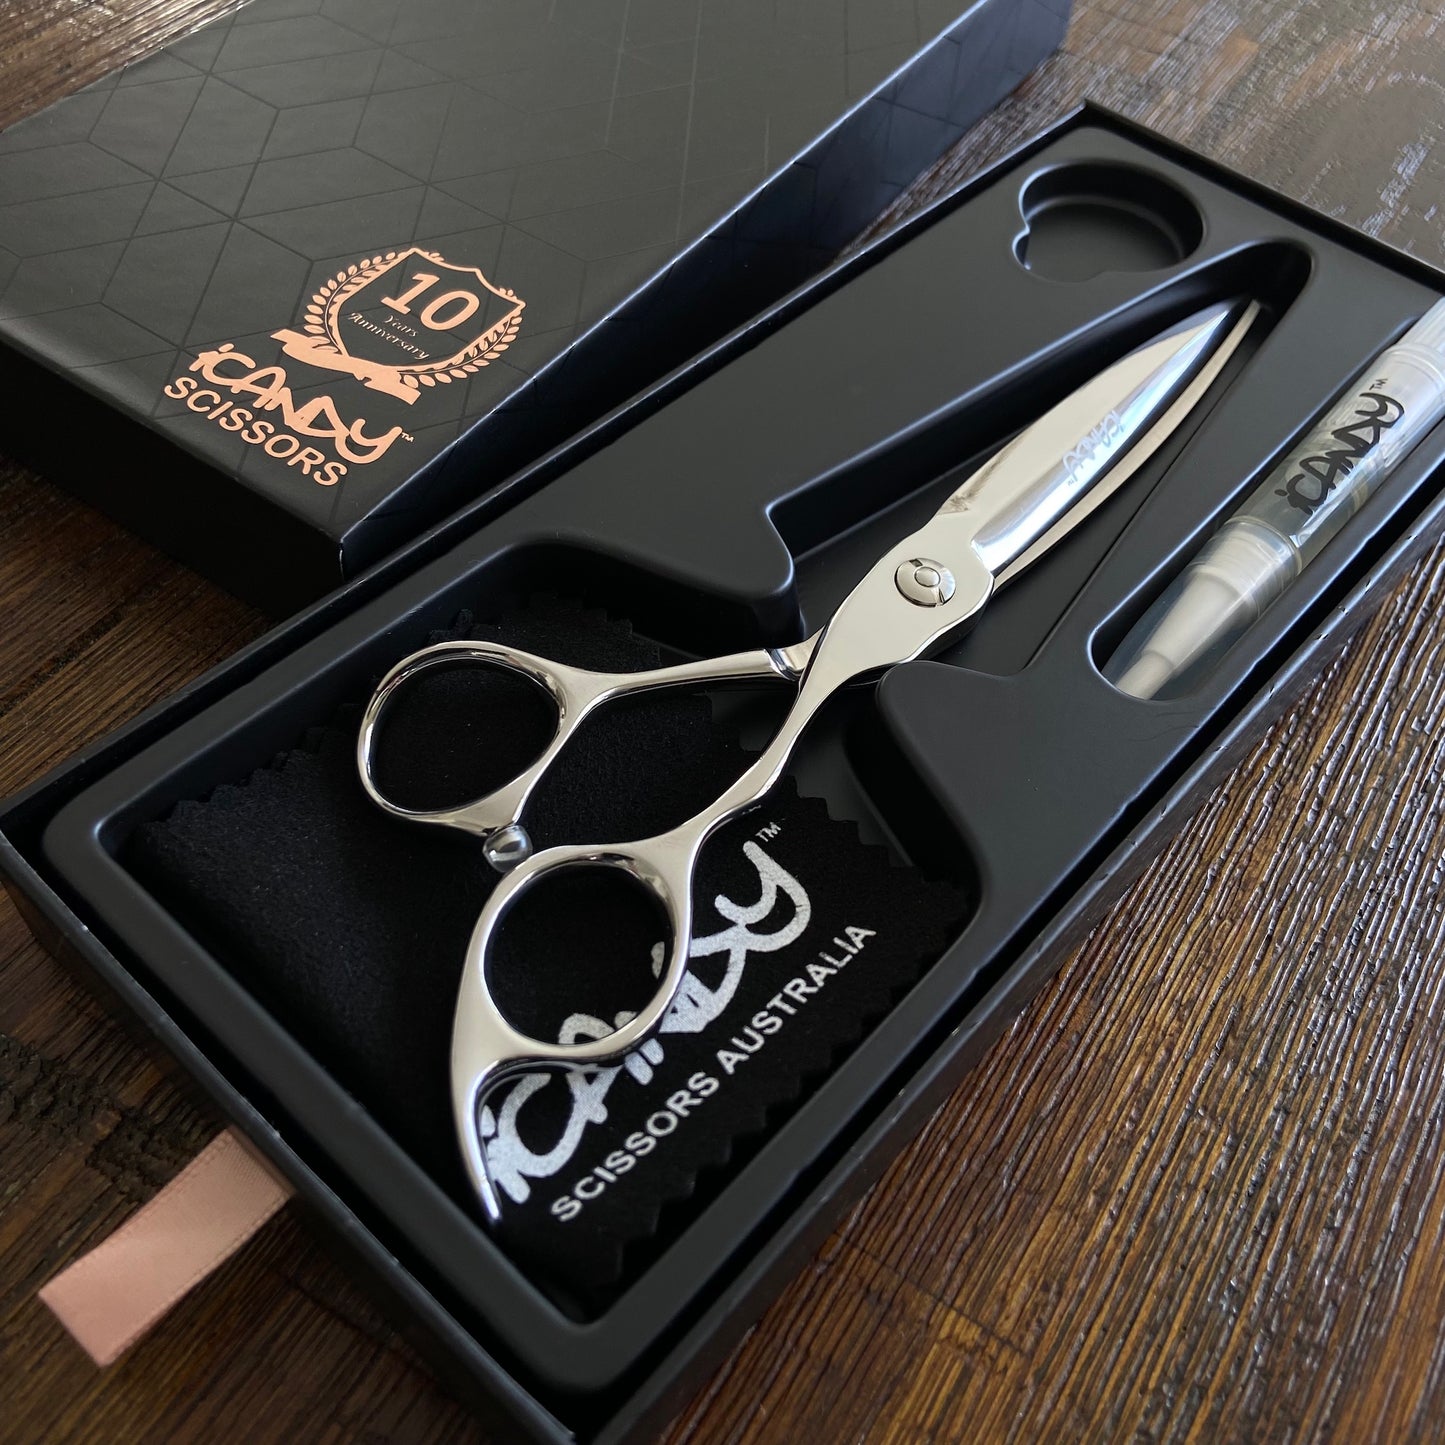 iCandy SLIDER VG10 Scissors (7.0 inch) In Box